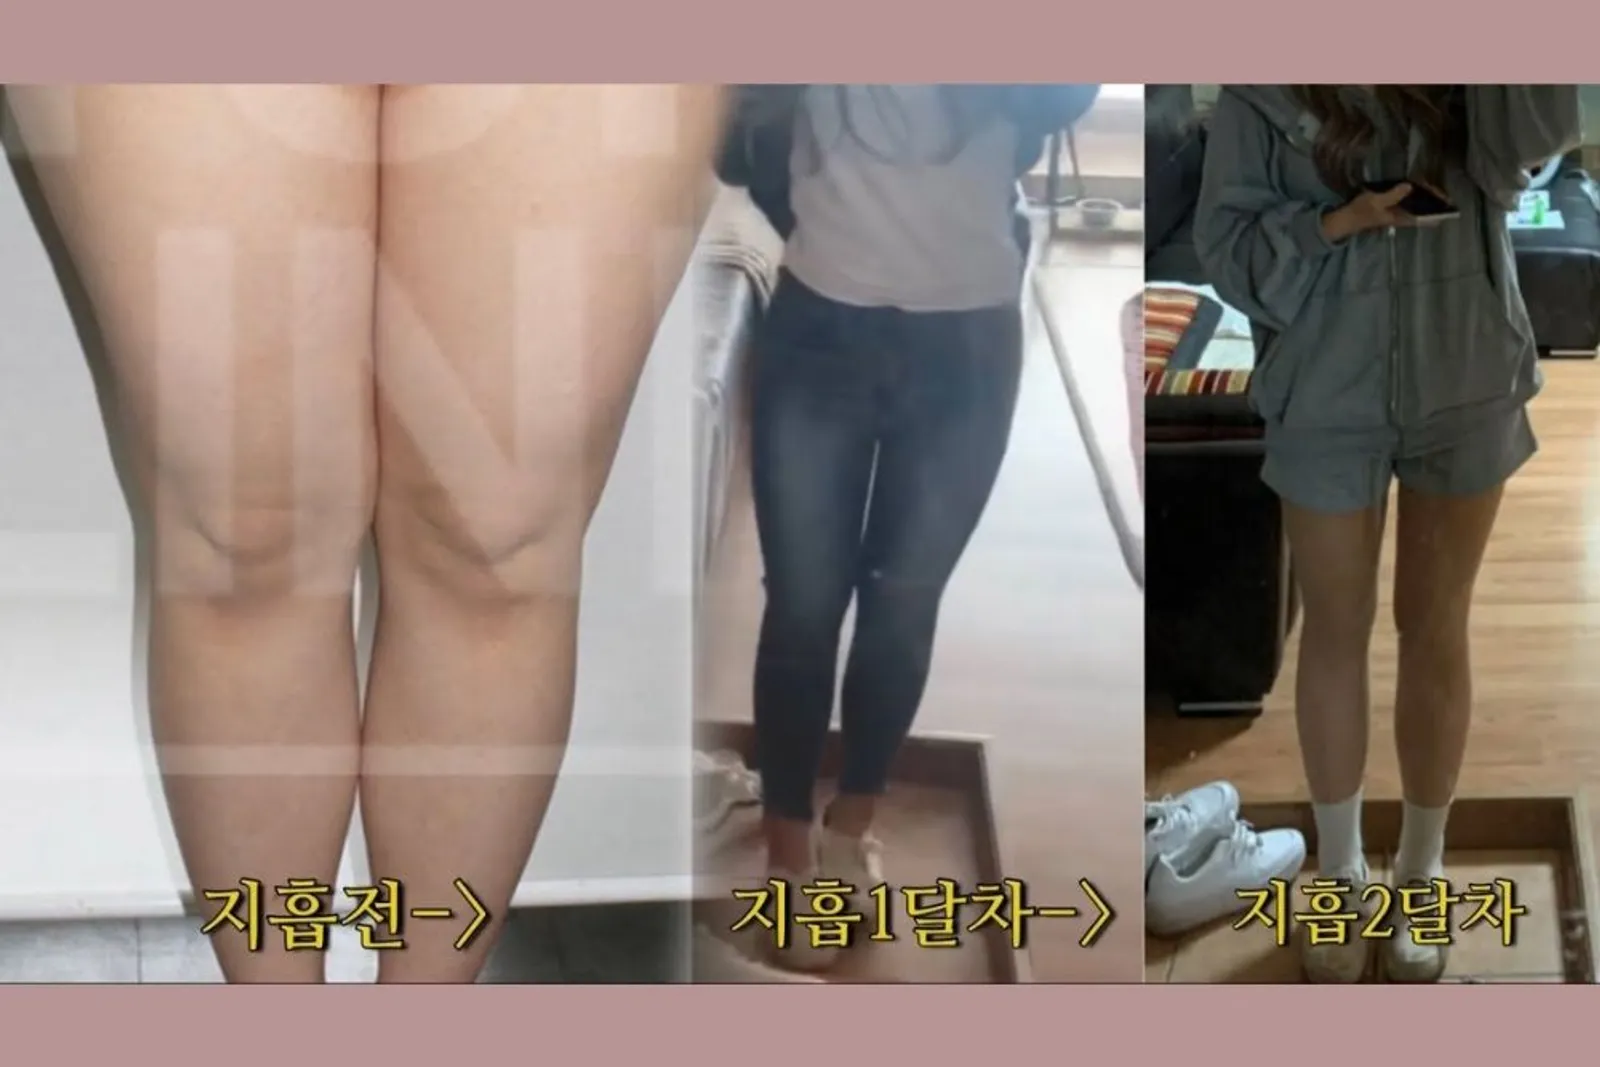 Bagikan Tips Turunkan Berat Badan, YouTuber Korea Ini Justru Dihujat